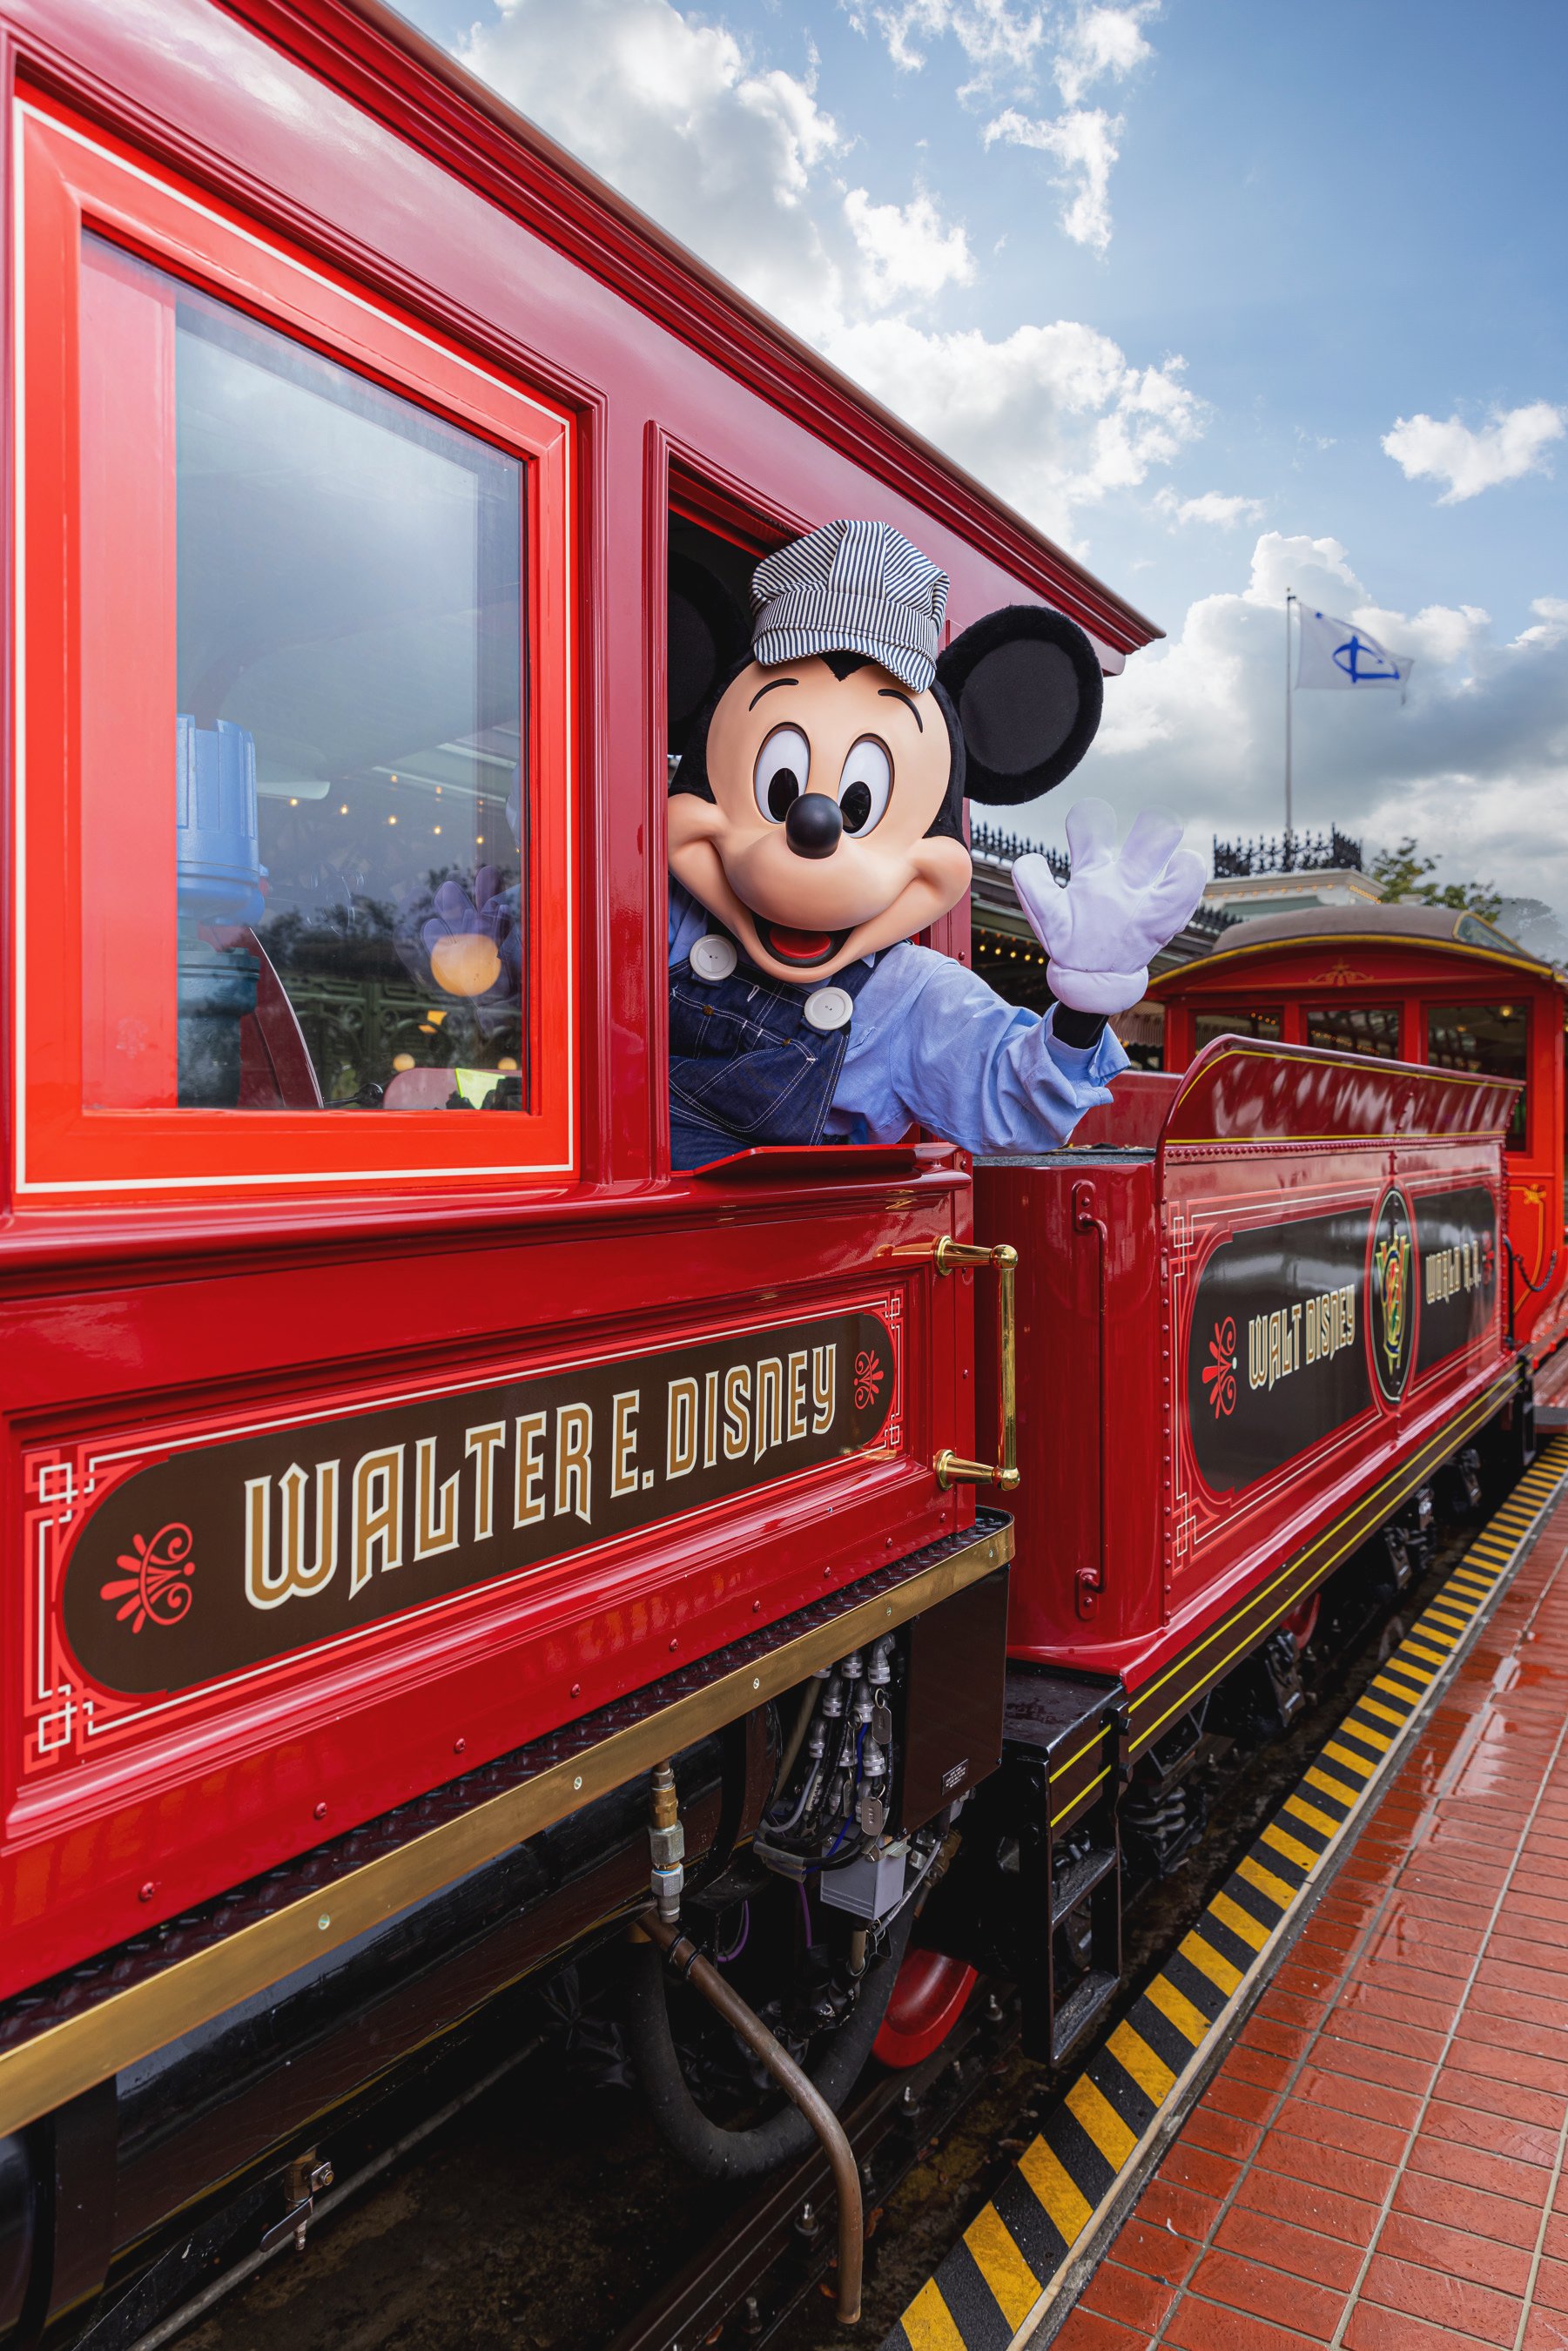 Walt Disney World Railroad at Magic Kingdom (A Charming Train Ride)